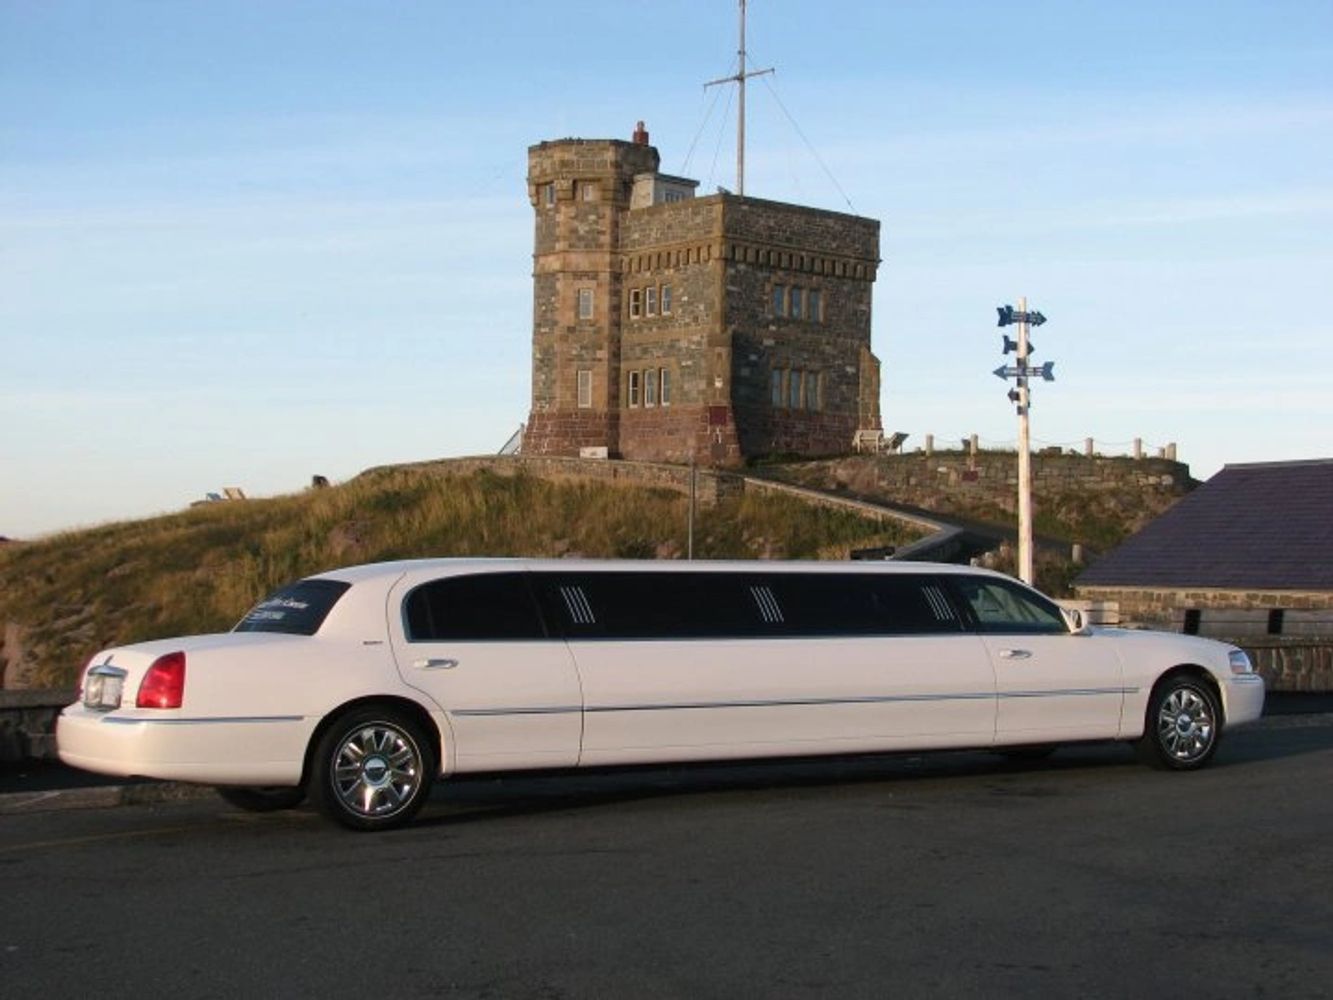 parked white limousine